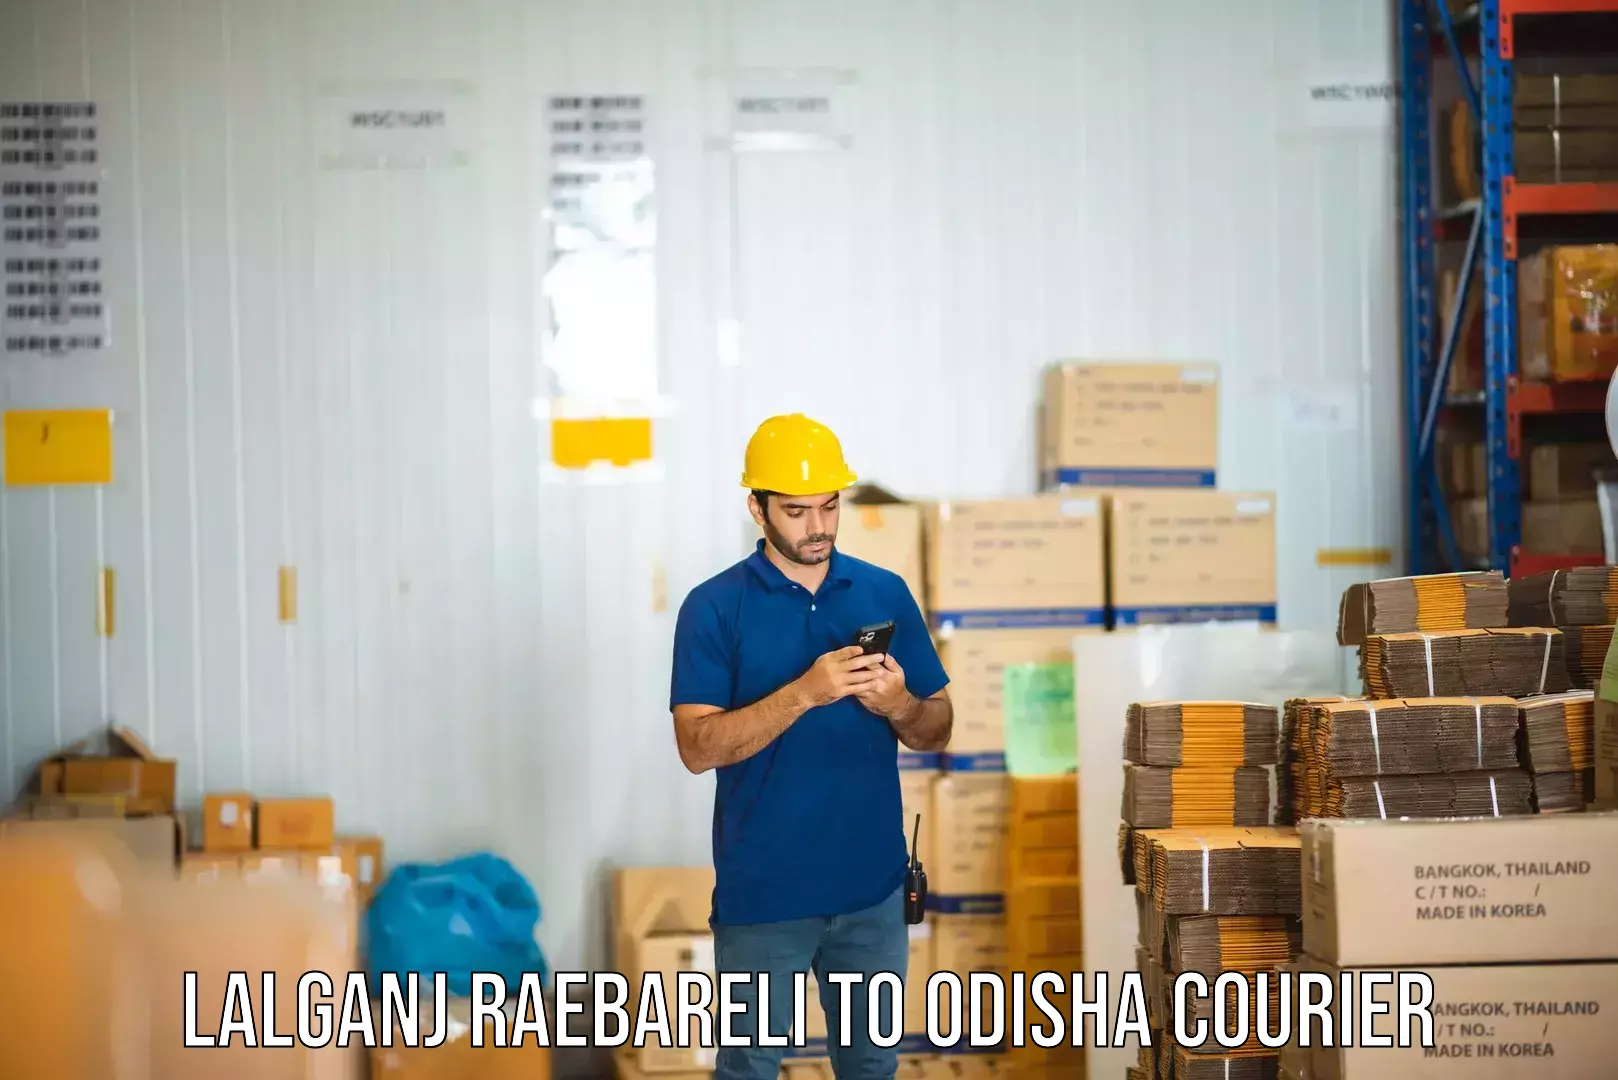 Nationwide delivery network Lalganj Raebareli to Odisha